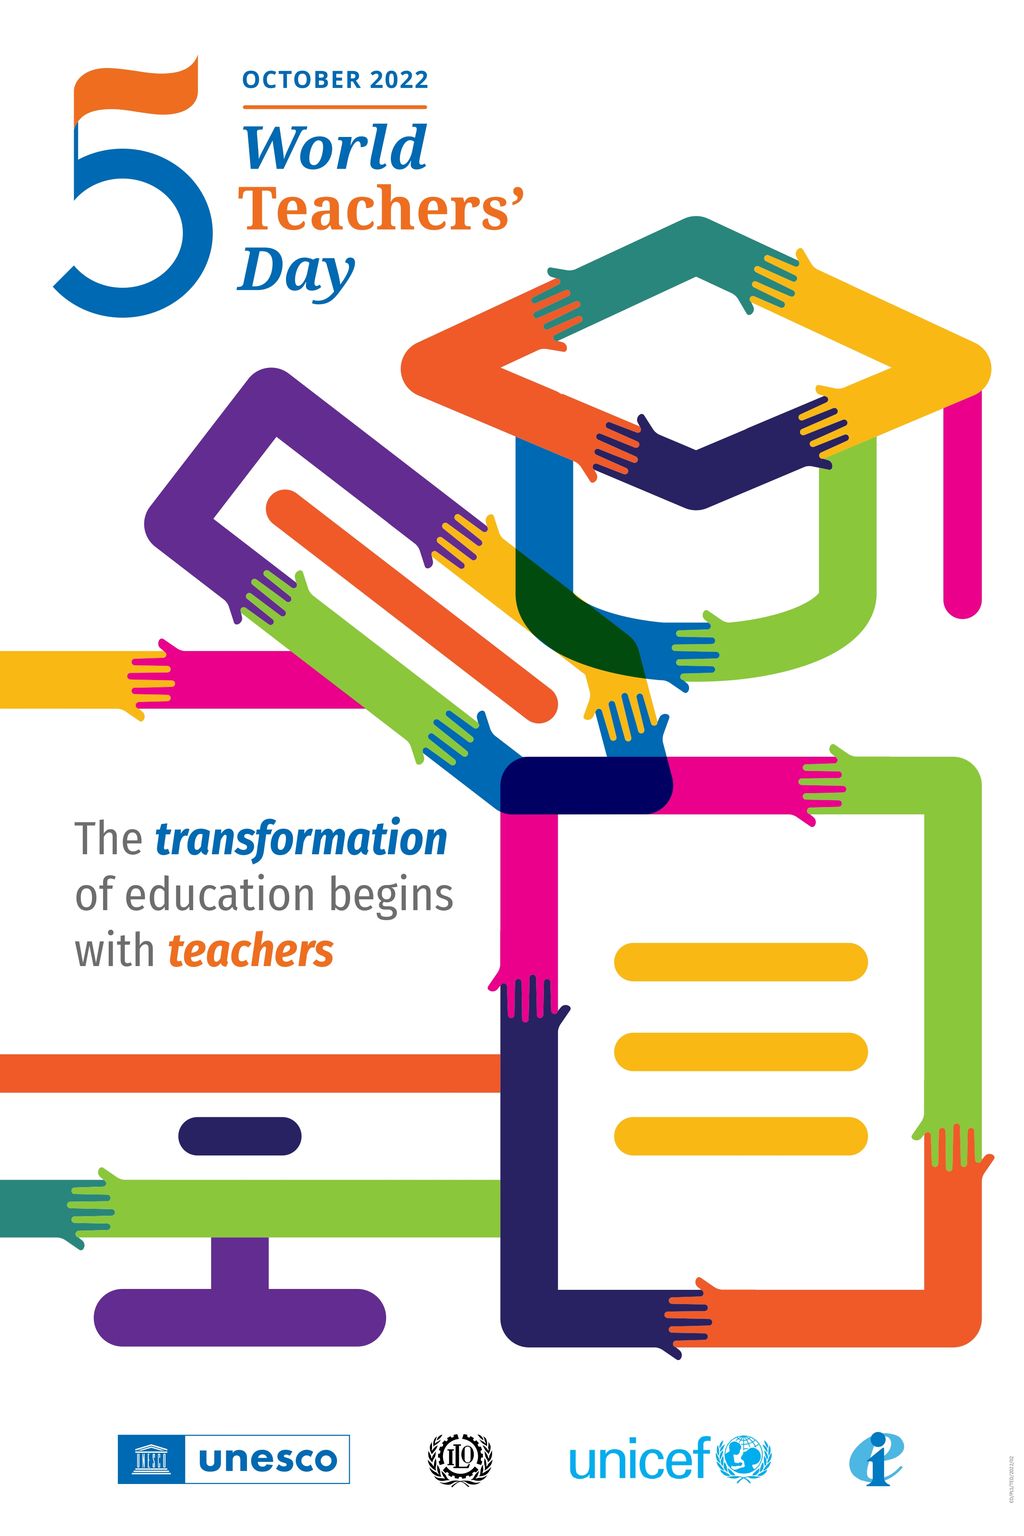 Hari Guru Sedunia 2022 akan dirayakan pada tanggal 5 Oktober mendatang. Berikut ini ulasan terkait tema Hari Guru Sedunia 2022 beserta sejarah perayaannya.